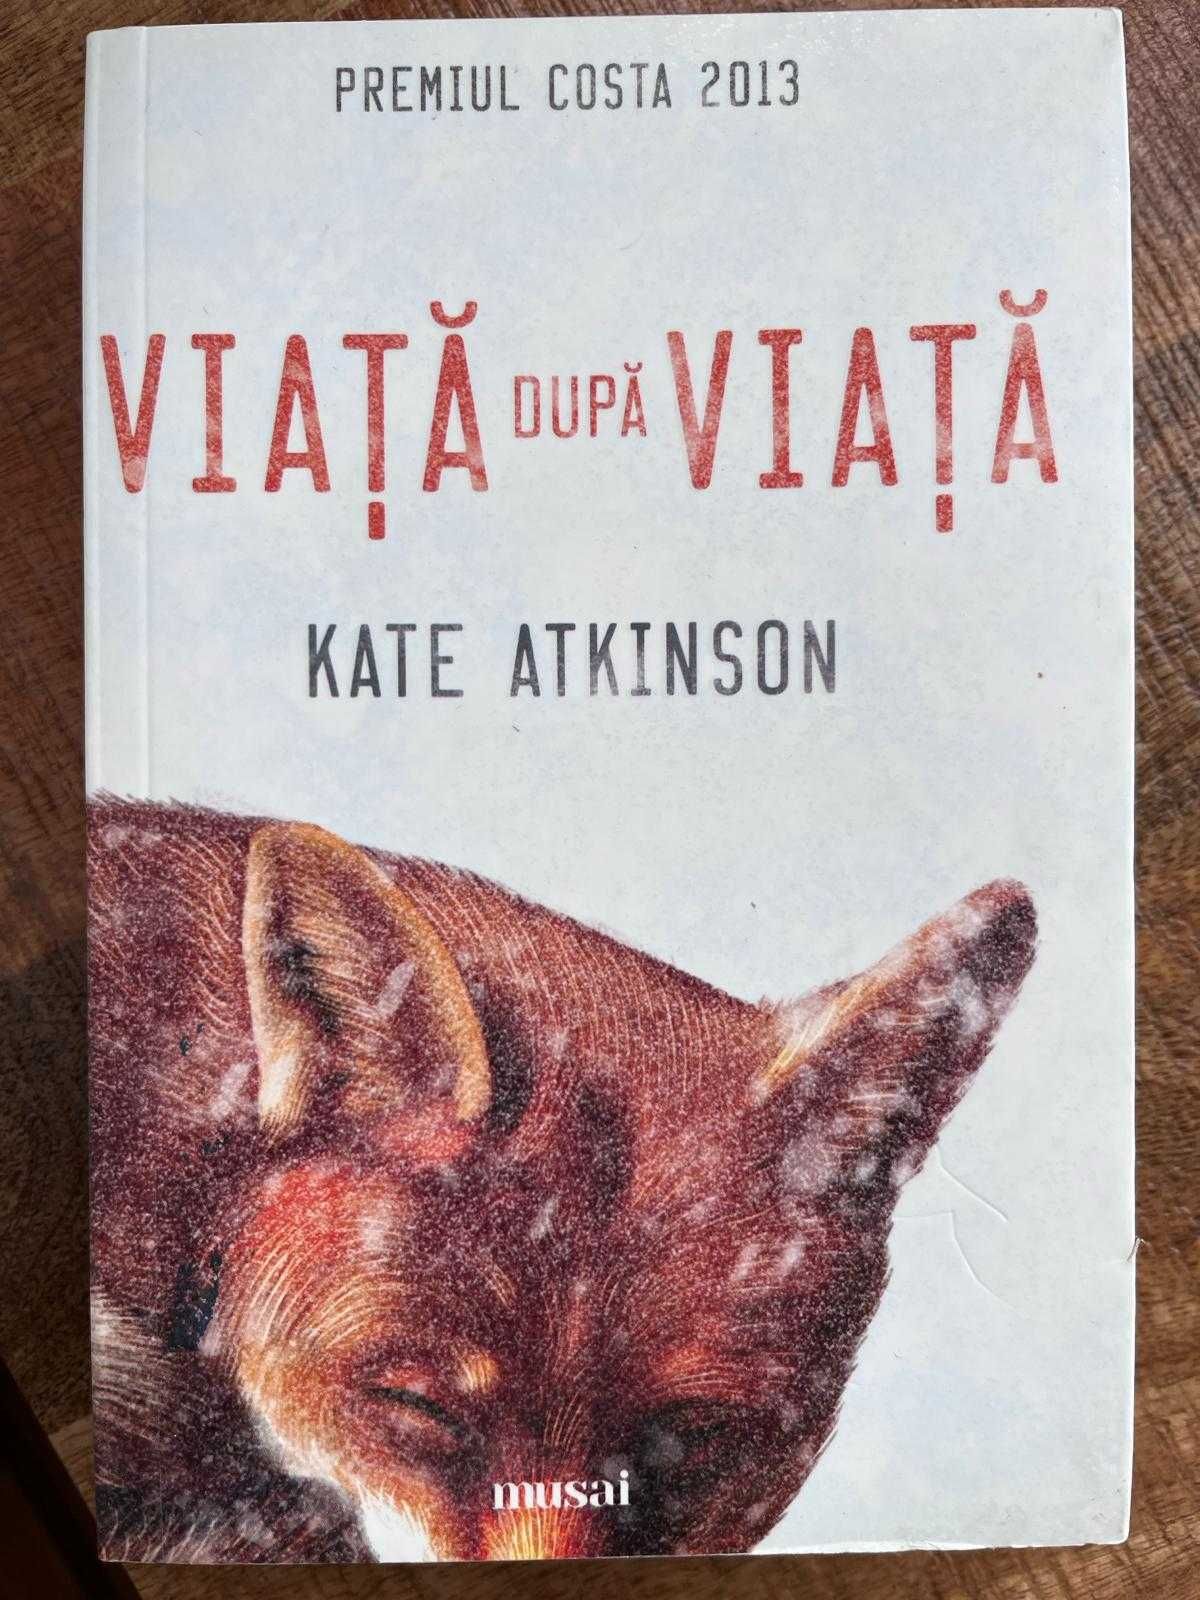 Viata dupa viata - de Kate Atkinson - Premiul COSTA 2013